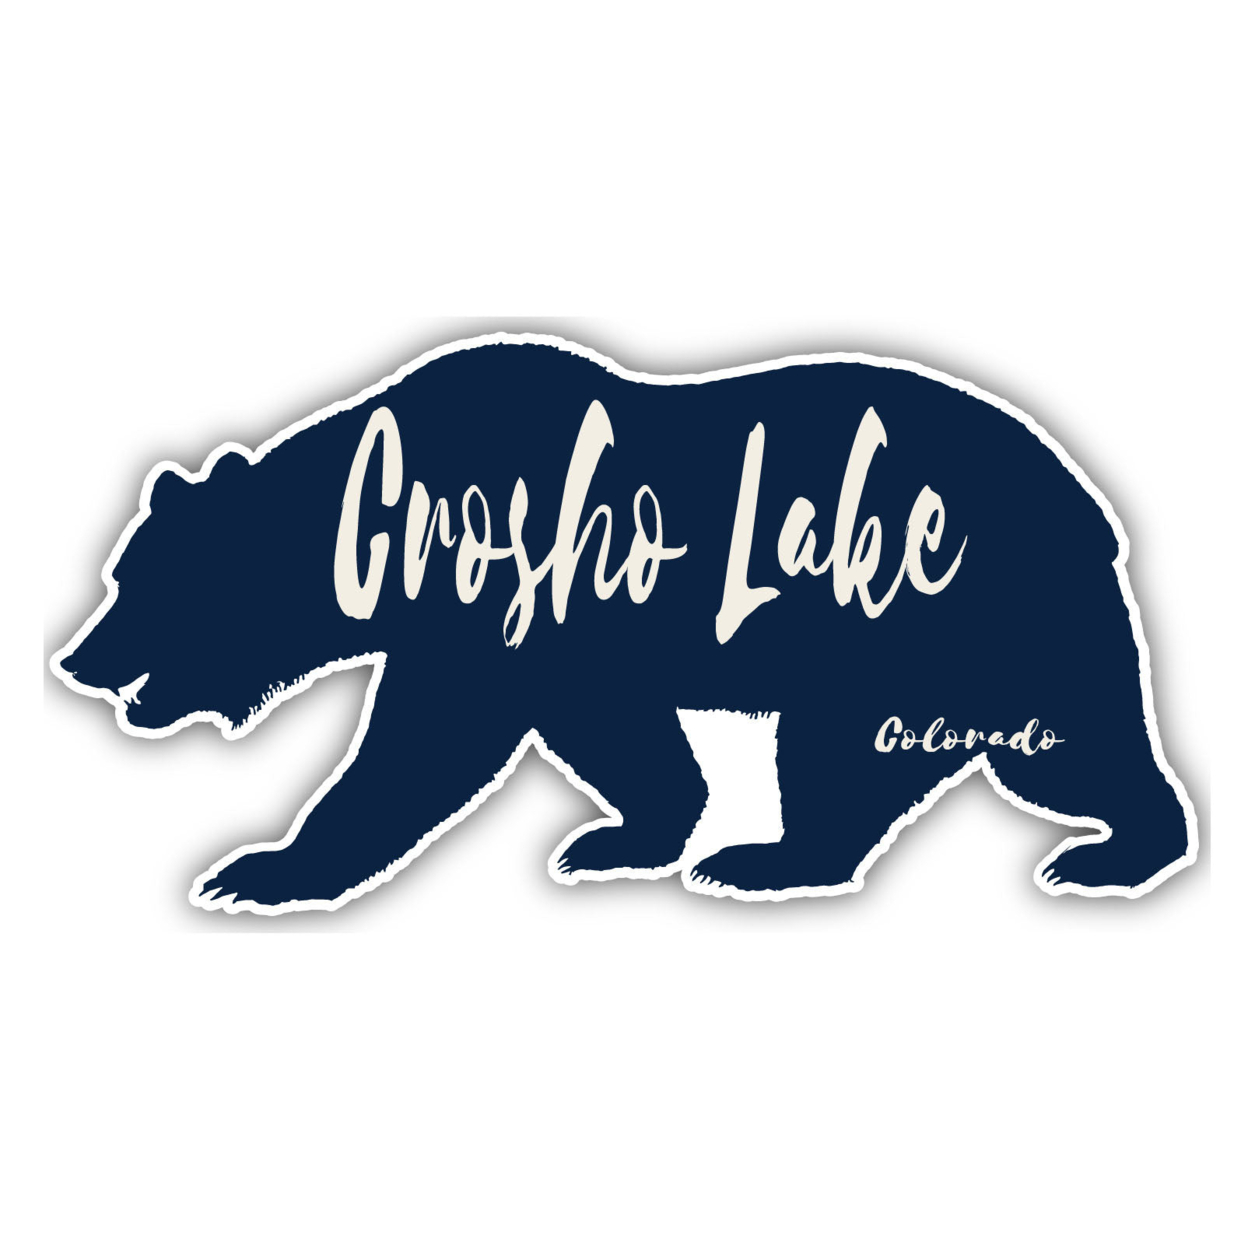 Crosho Lake Colorado Souvenir Decorative Stickers (Choose Theme And Size) - Single Unit, 2-Inch, Bear